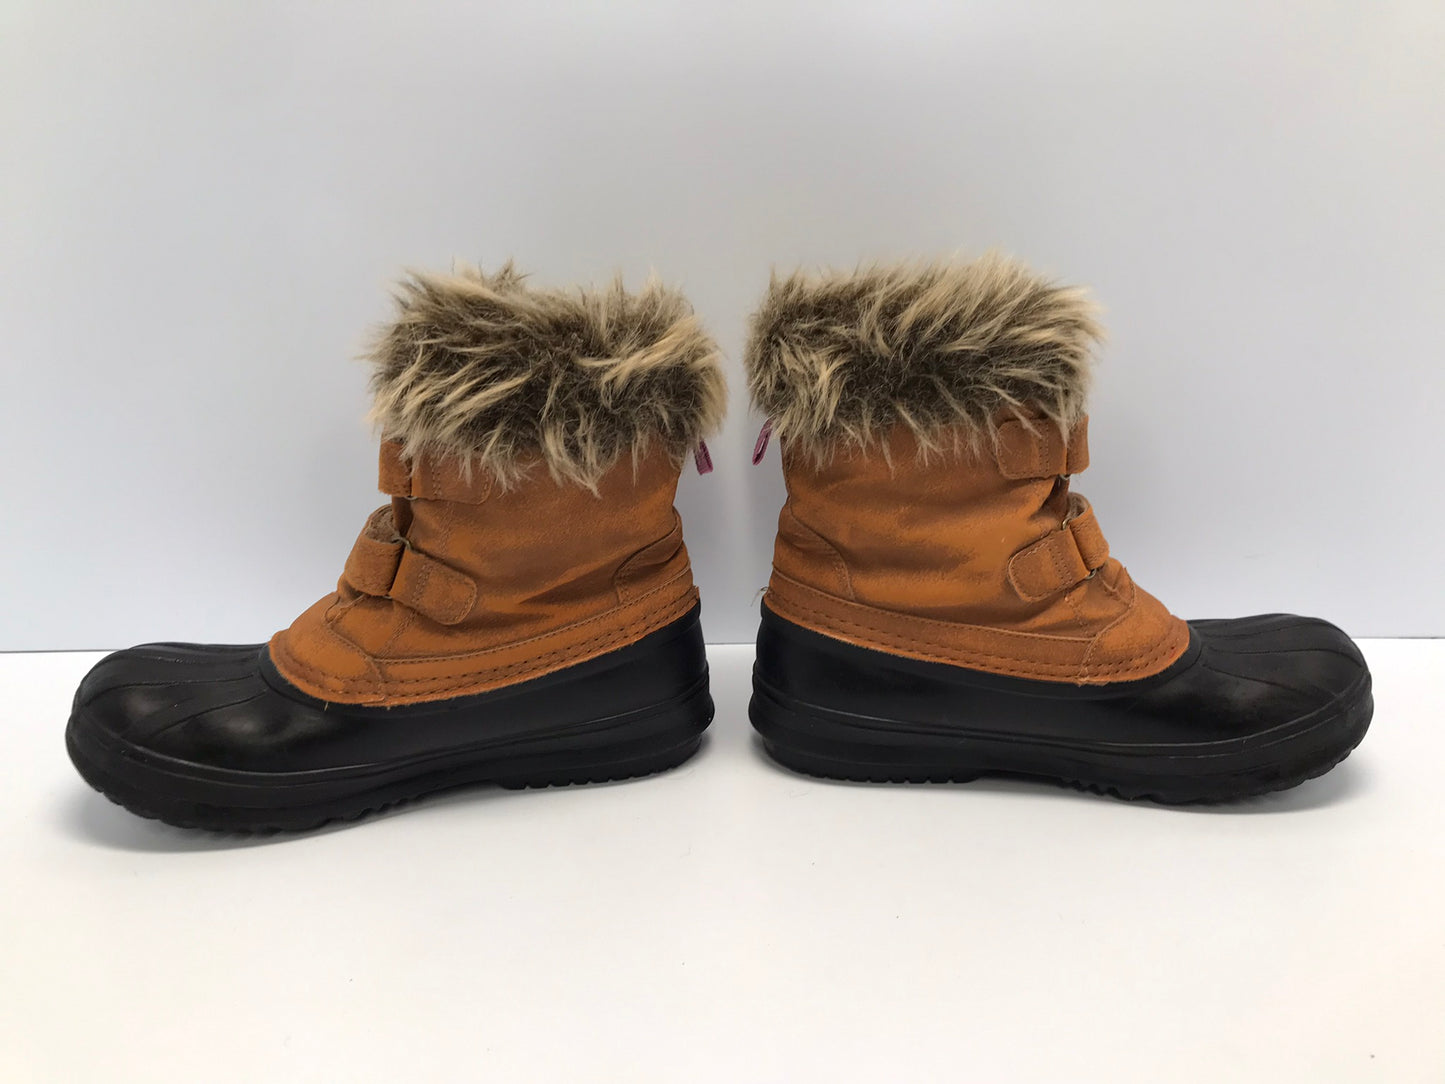 Winter Boots Child Size 4 Joe Fresh Adventure Faux Fur and Suade Excellent Soles